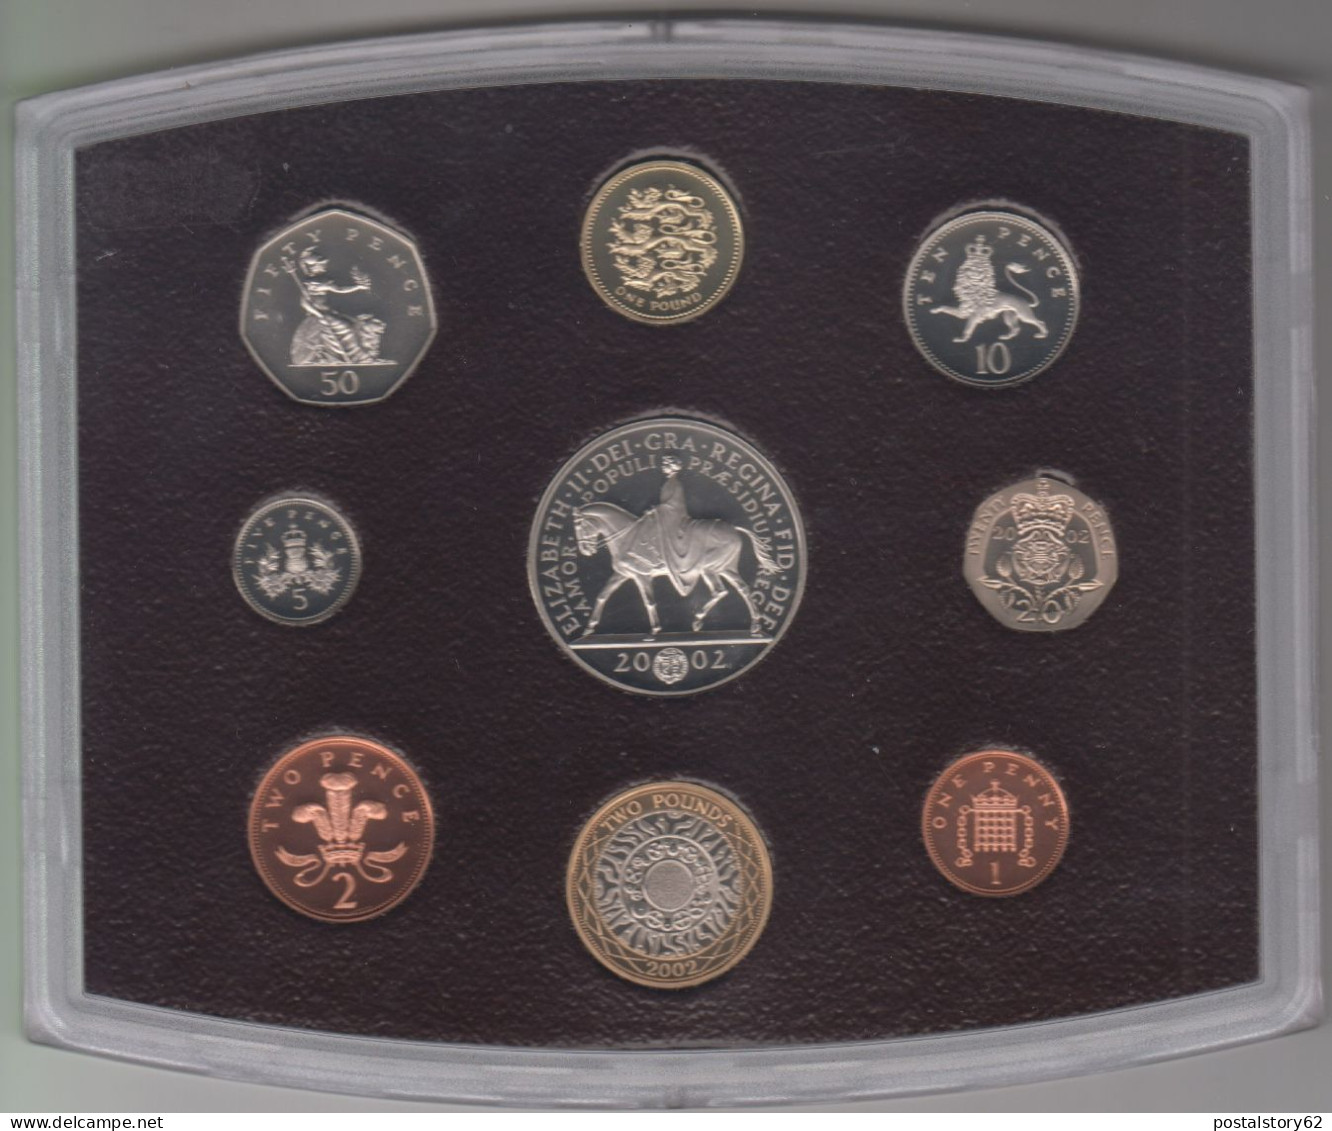 Gran Bretagna, United Kingdom Proof Collection - Serie Completa Ufficiale In Confezione Integra 2002 - Maundy Sets & Herdenkings